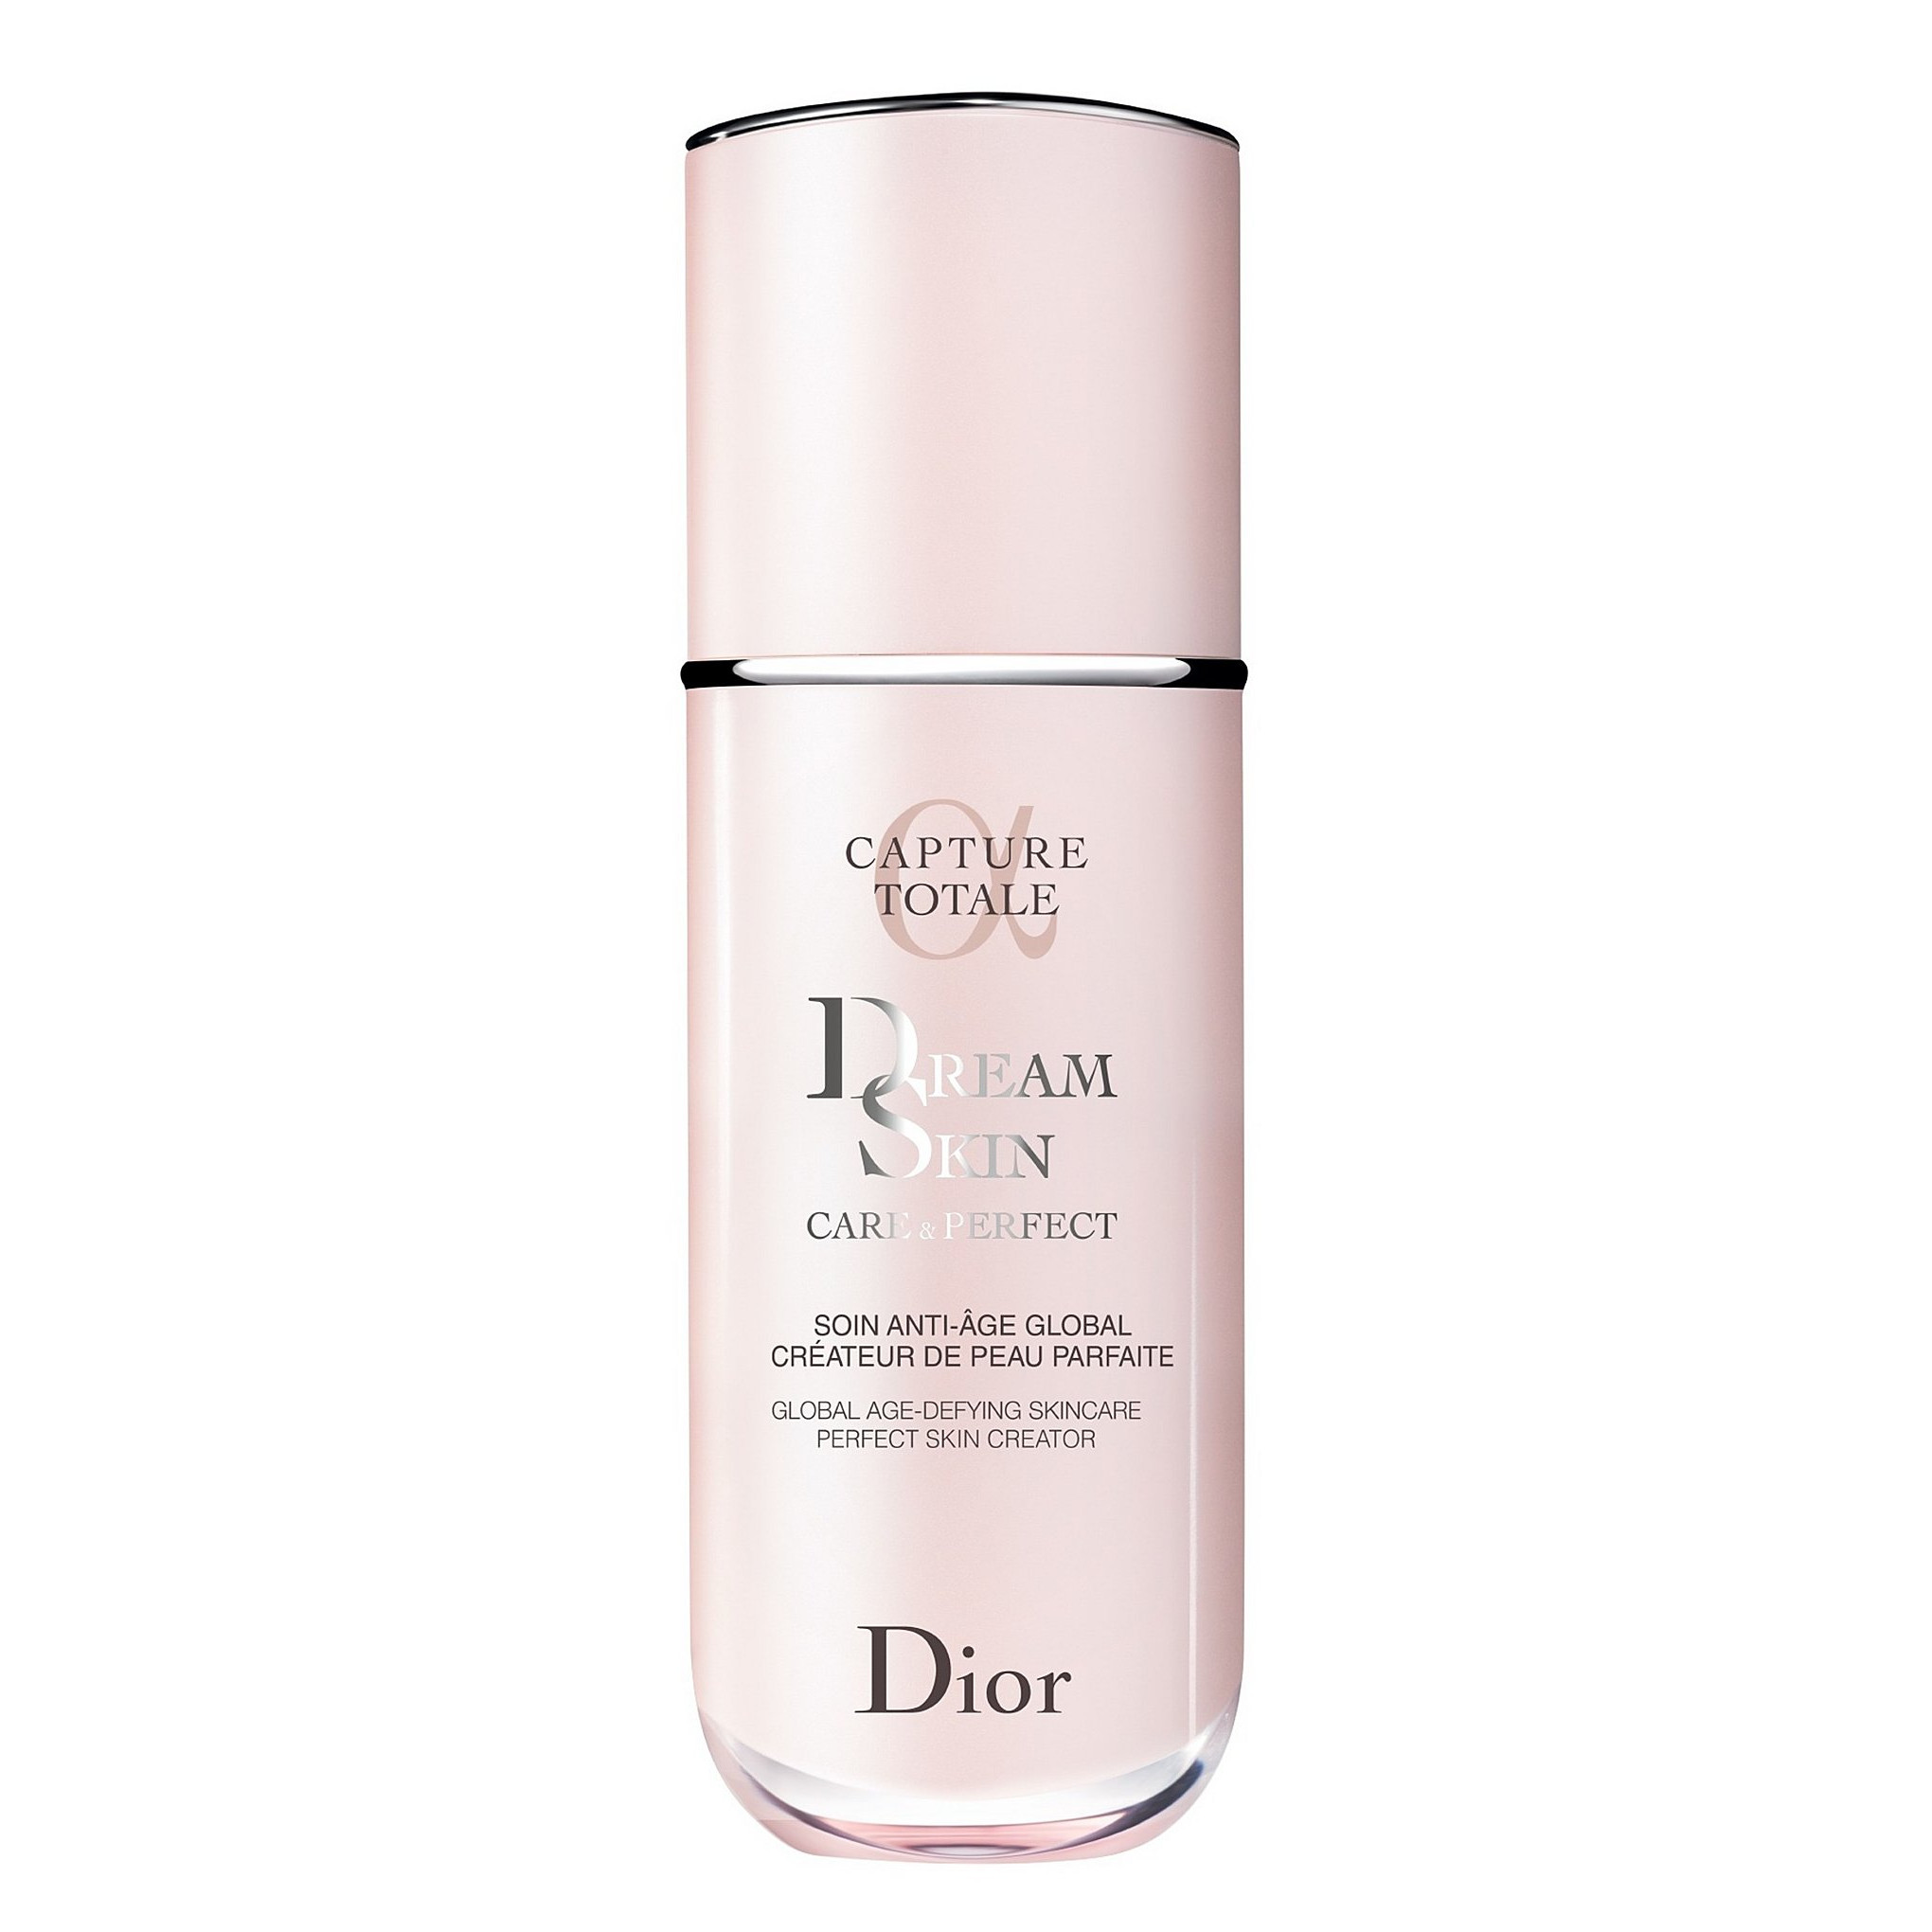 Tinh chất dưỡng da Dior Capture Totale Dream Skin Care & Perfect